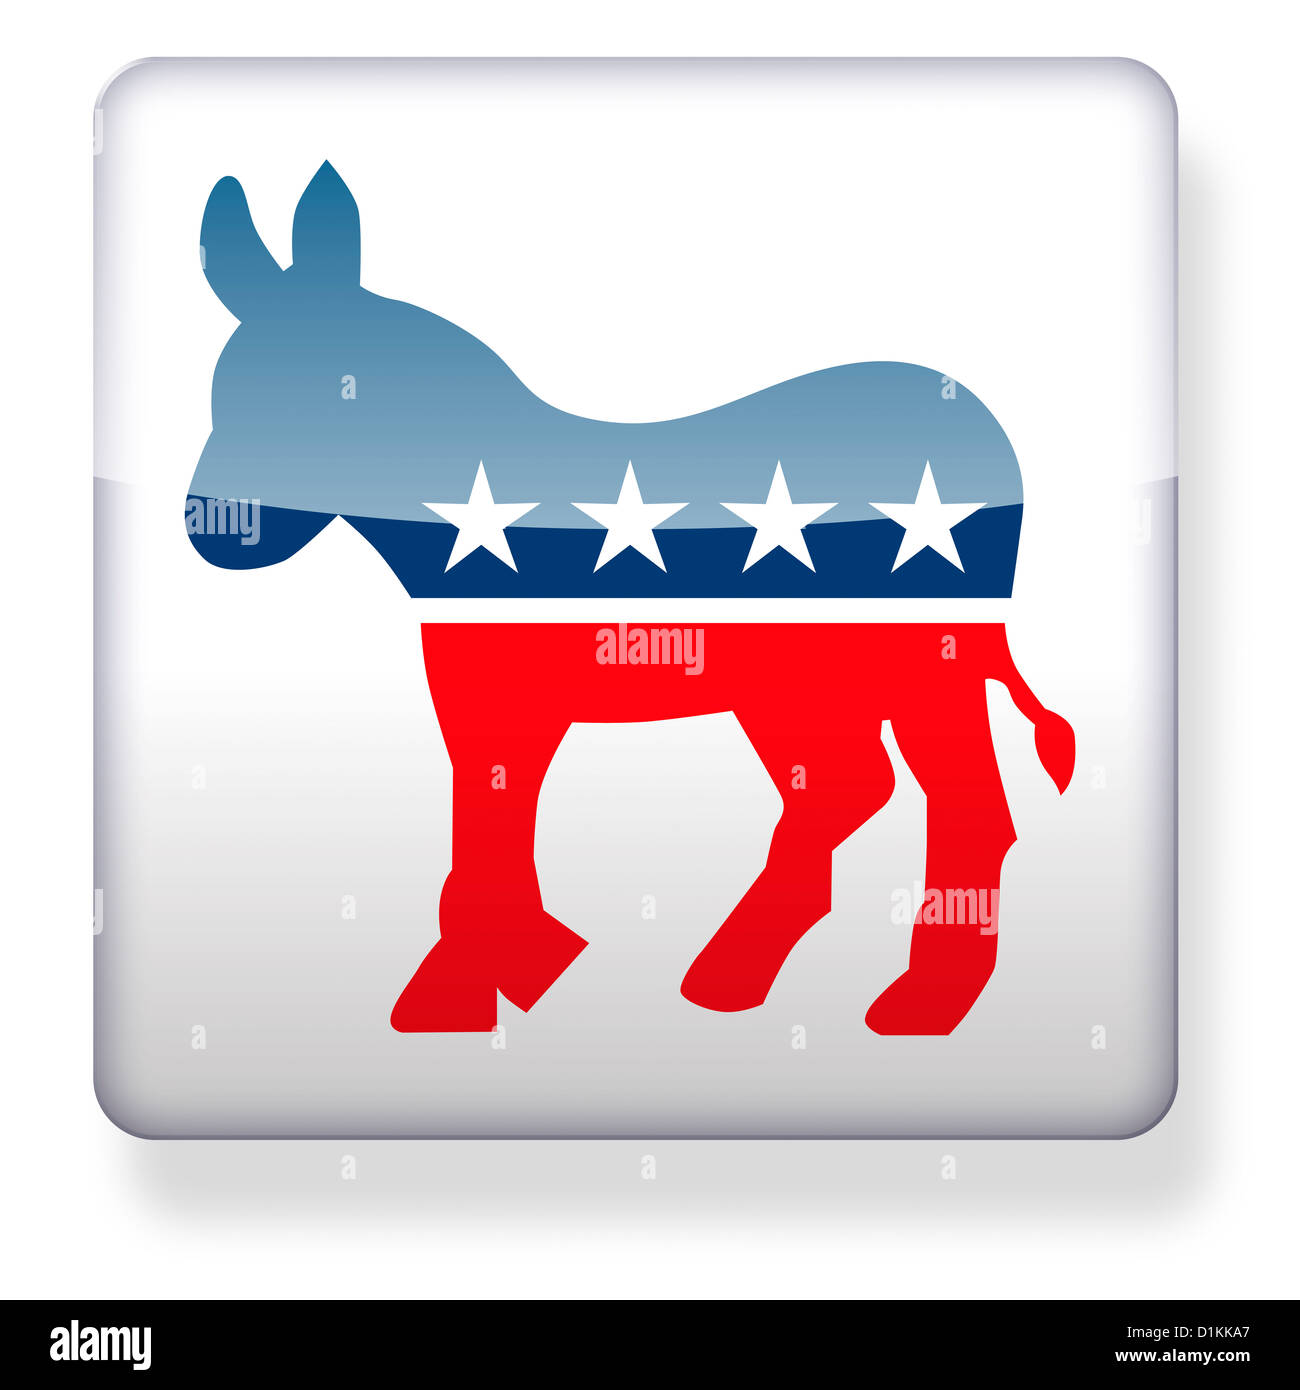 Democrat donkey political logo as an app icon Stock Photo